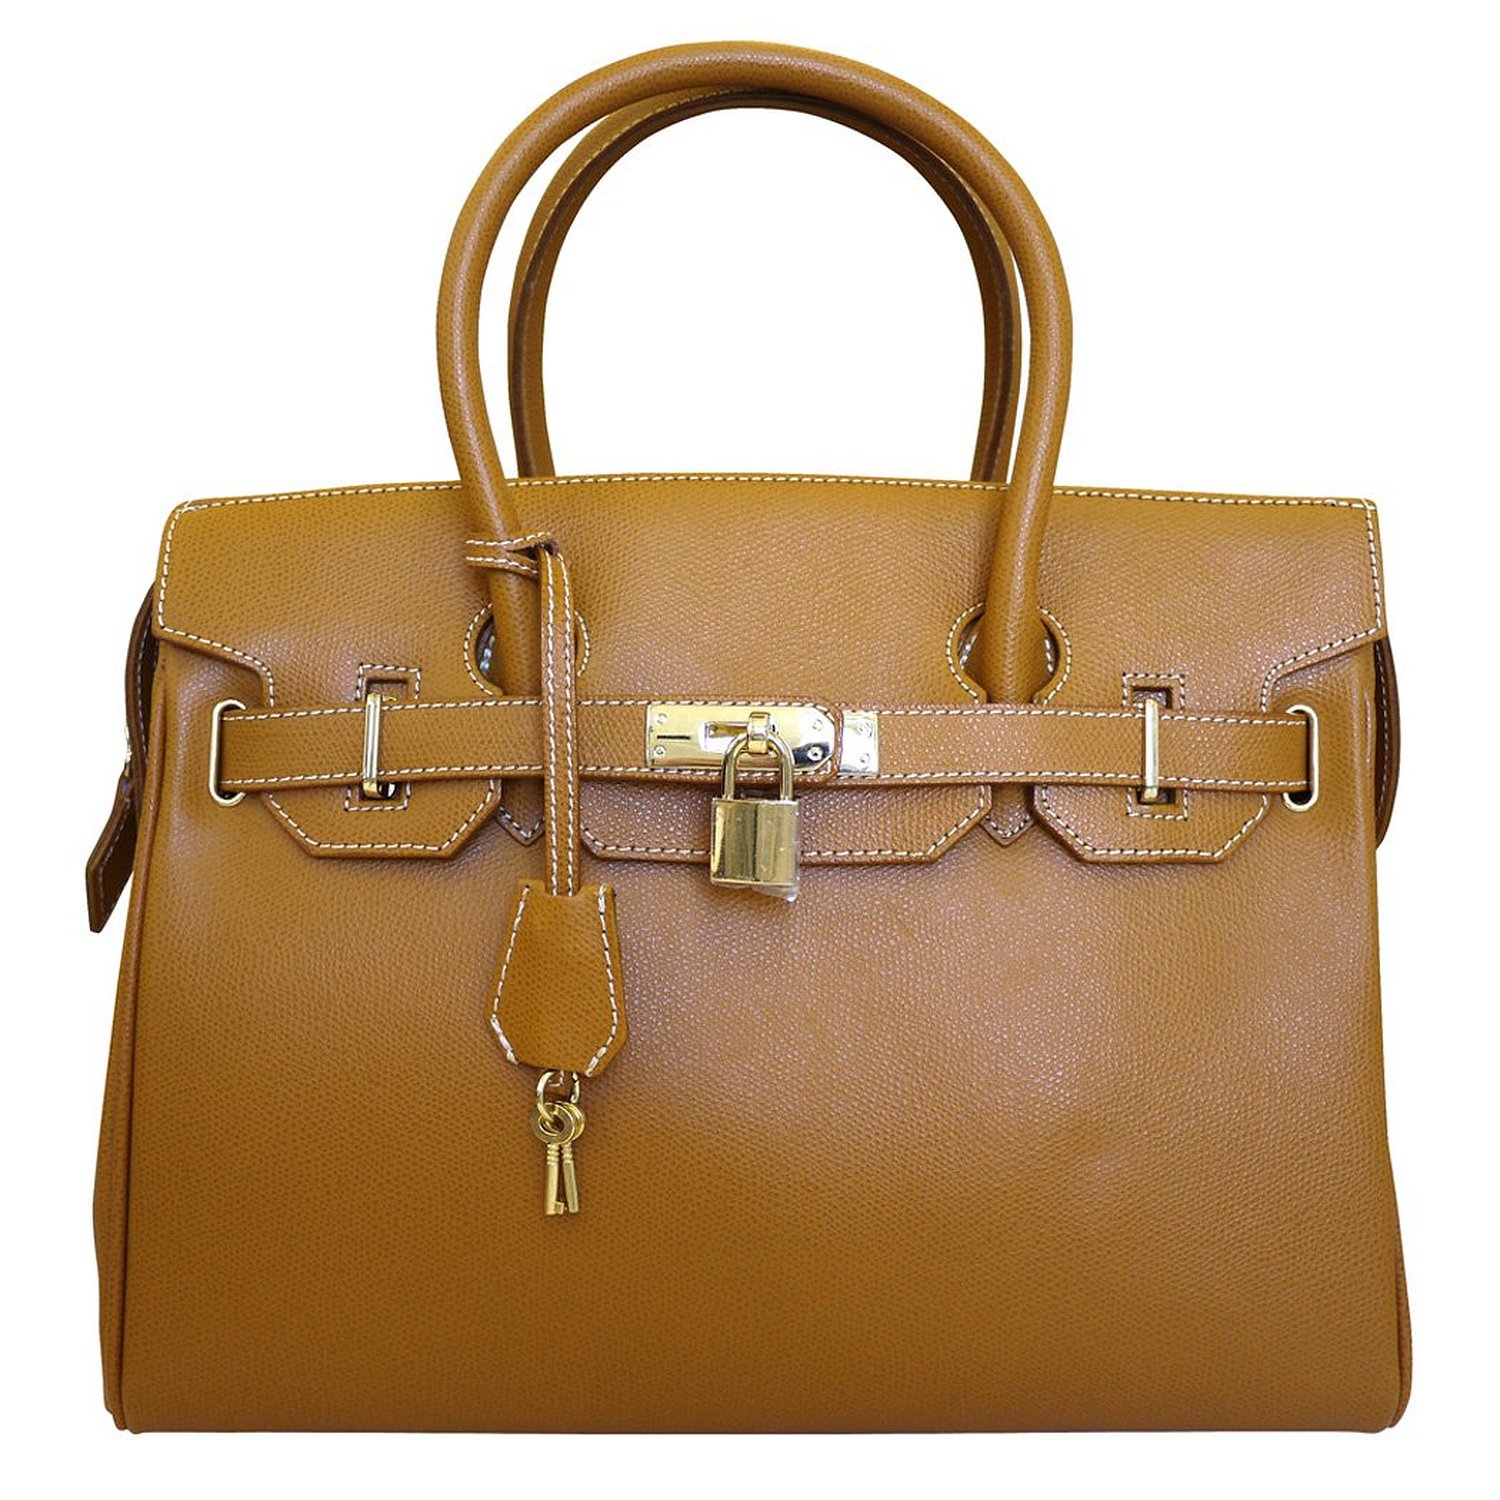 Carbotti Birkin Inspired Style Classico Leather Handbag in Honey ...